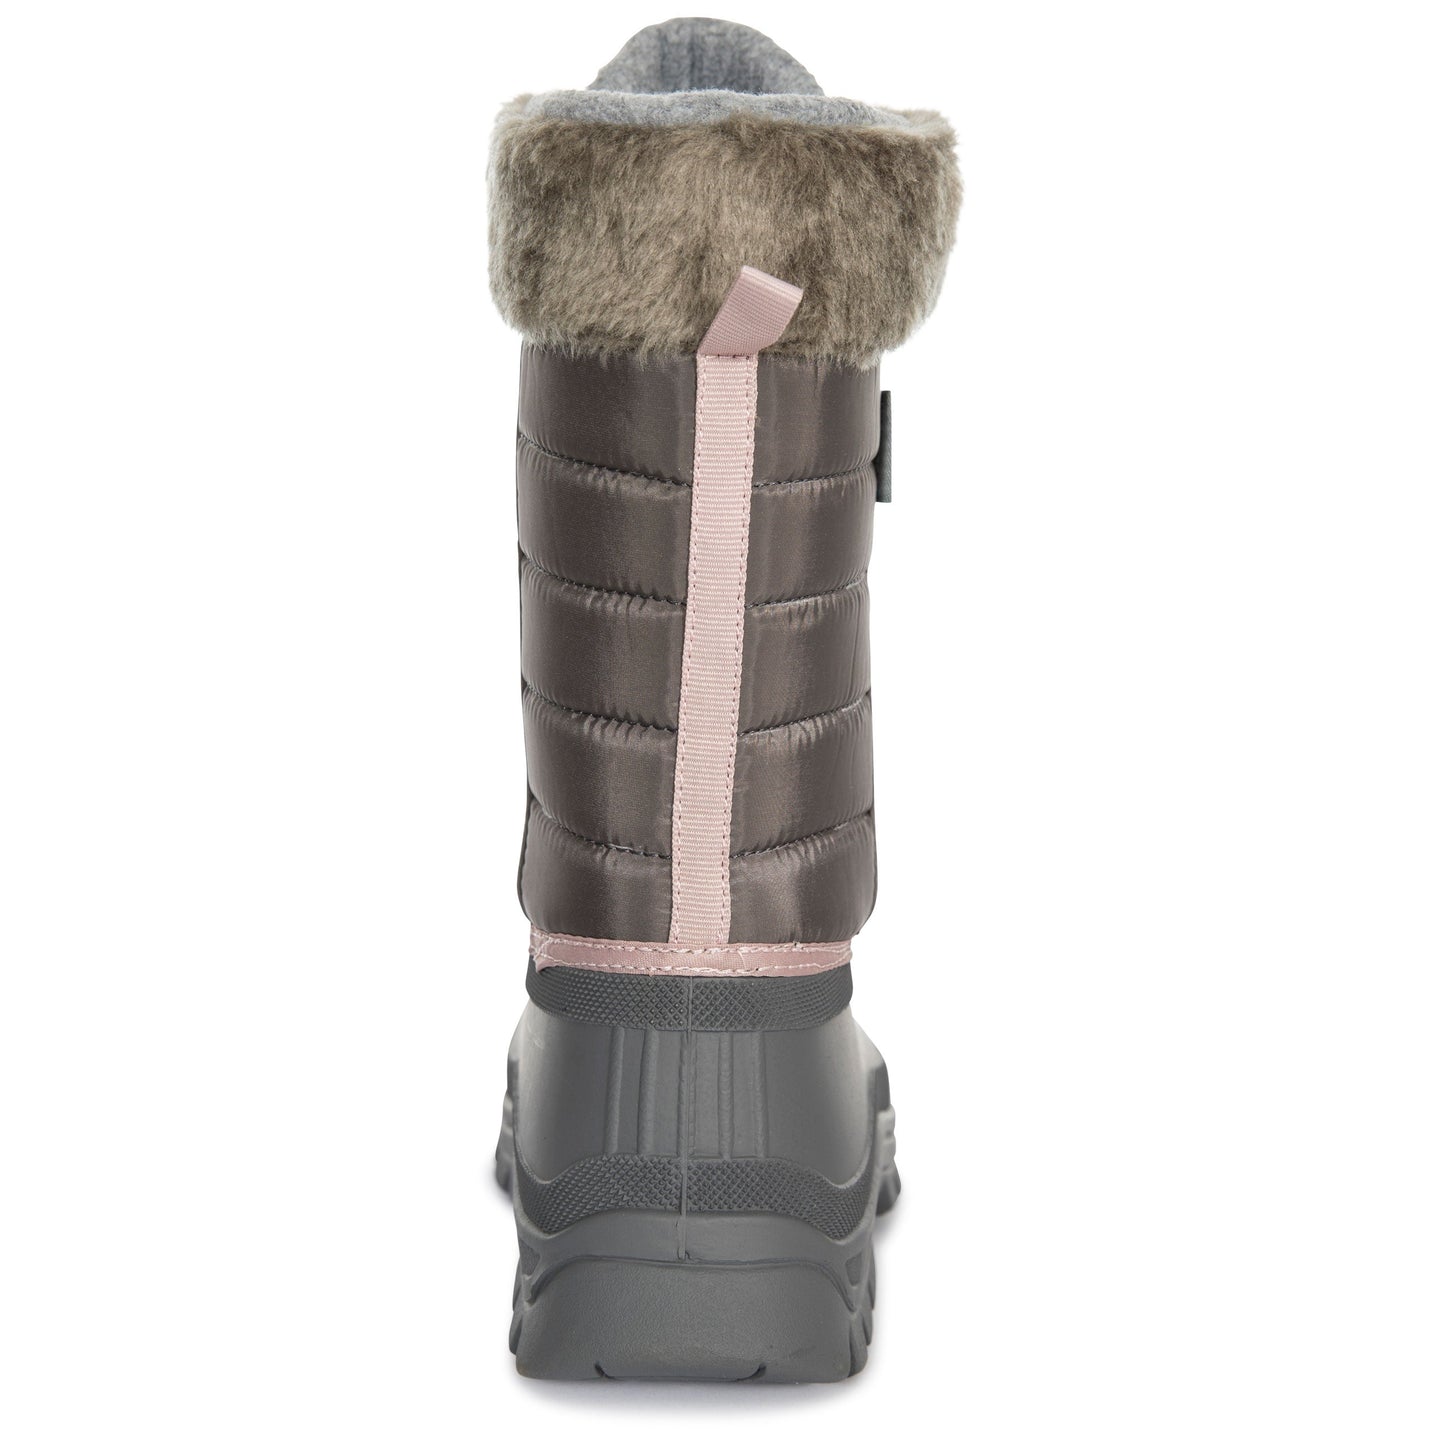 Stavra II Women's Insulated Waterproof Snow Boots